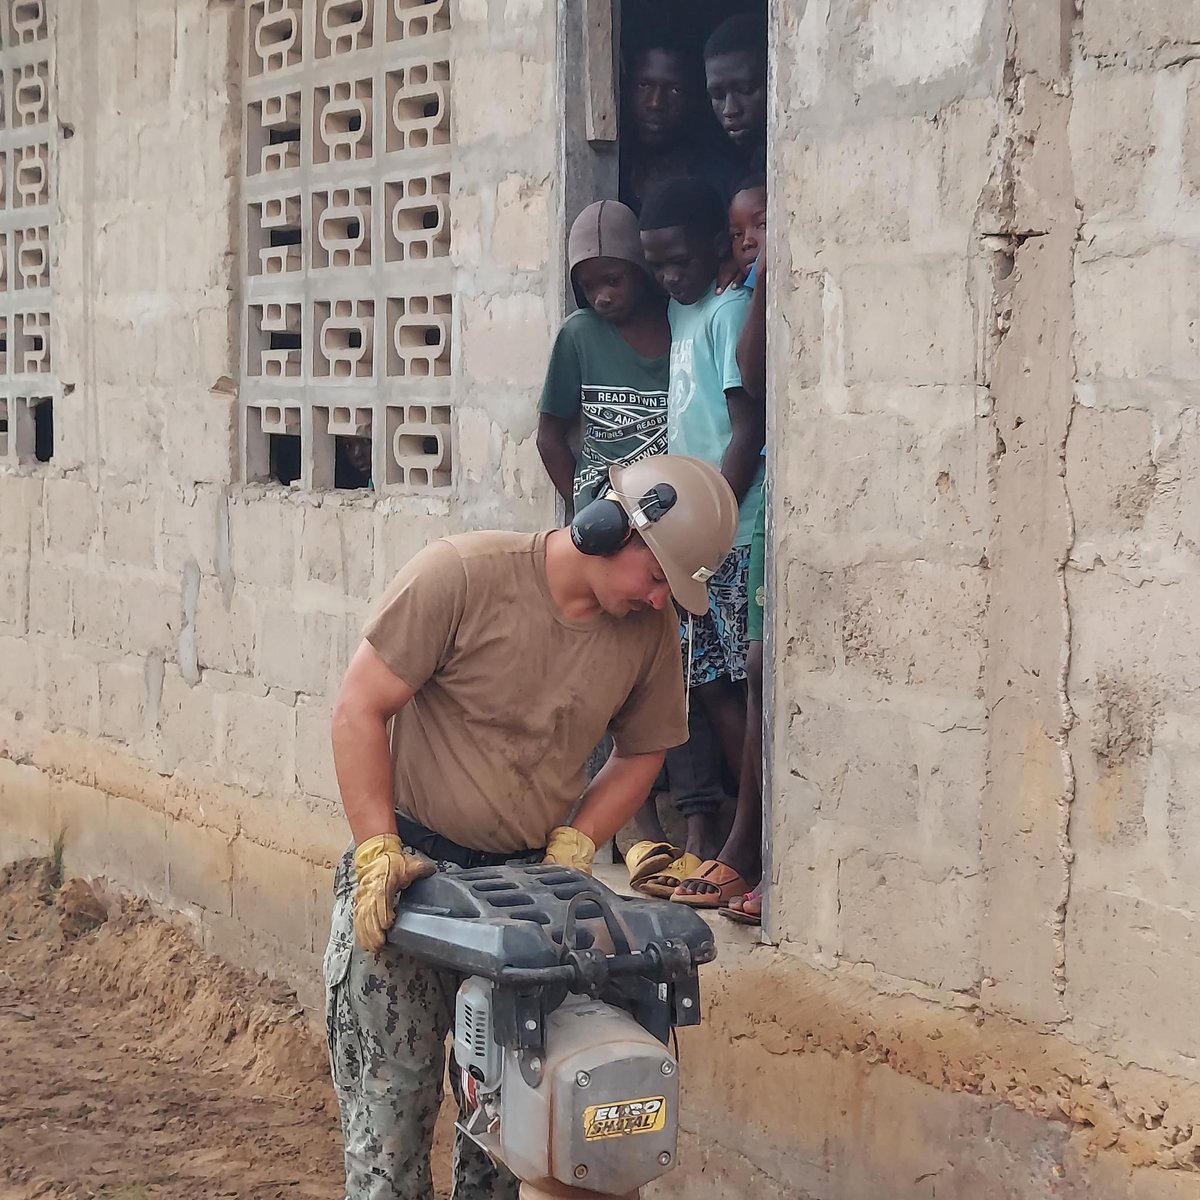 #USNavy Photos of the Day: 

1️⃣ #USSPaulIgnatius GQ drill in Med @USNavyEurope
2️⃣ #USSDewey engineering watch in South China Sea
3️⃣ #USSPhilippineSea departs @NAV_STA_NORFOLK @TheCVN69 CSG @USFleetForces
4️⃣ #NMCB133 works at school in Nutekpor, Ghana
👉 dvidshub.net/r/uw5gq2